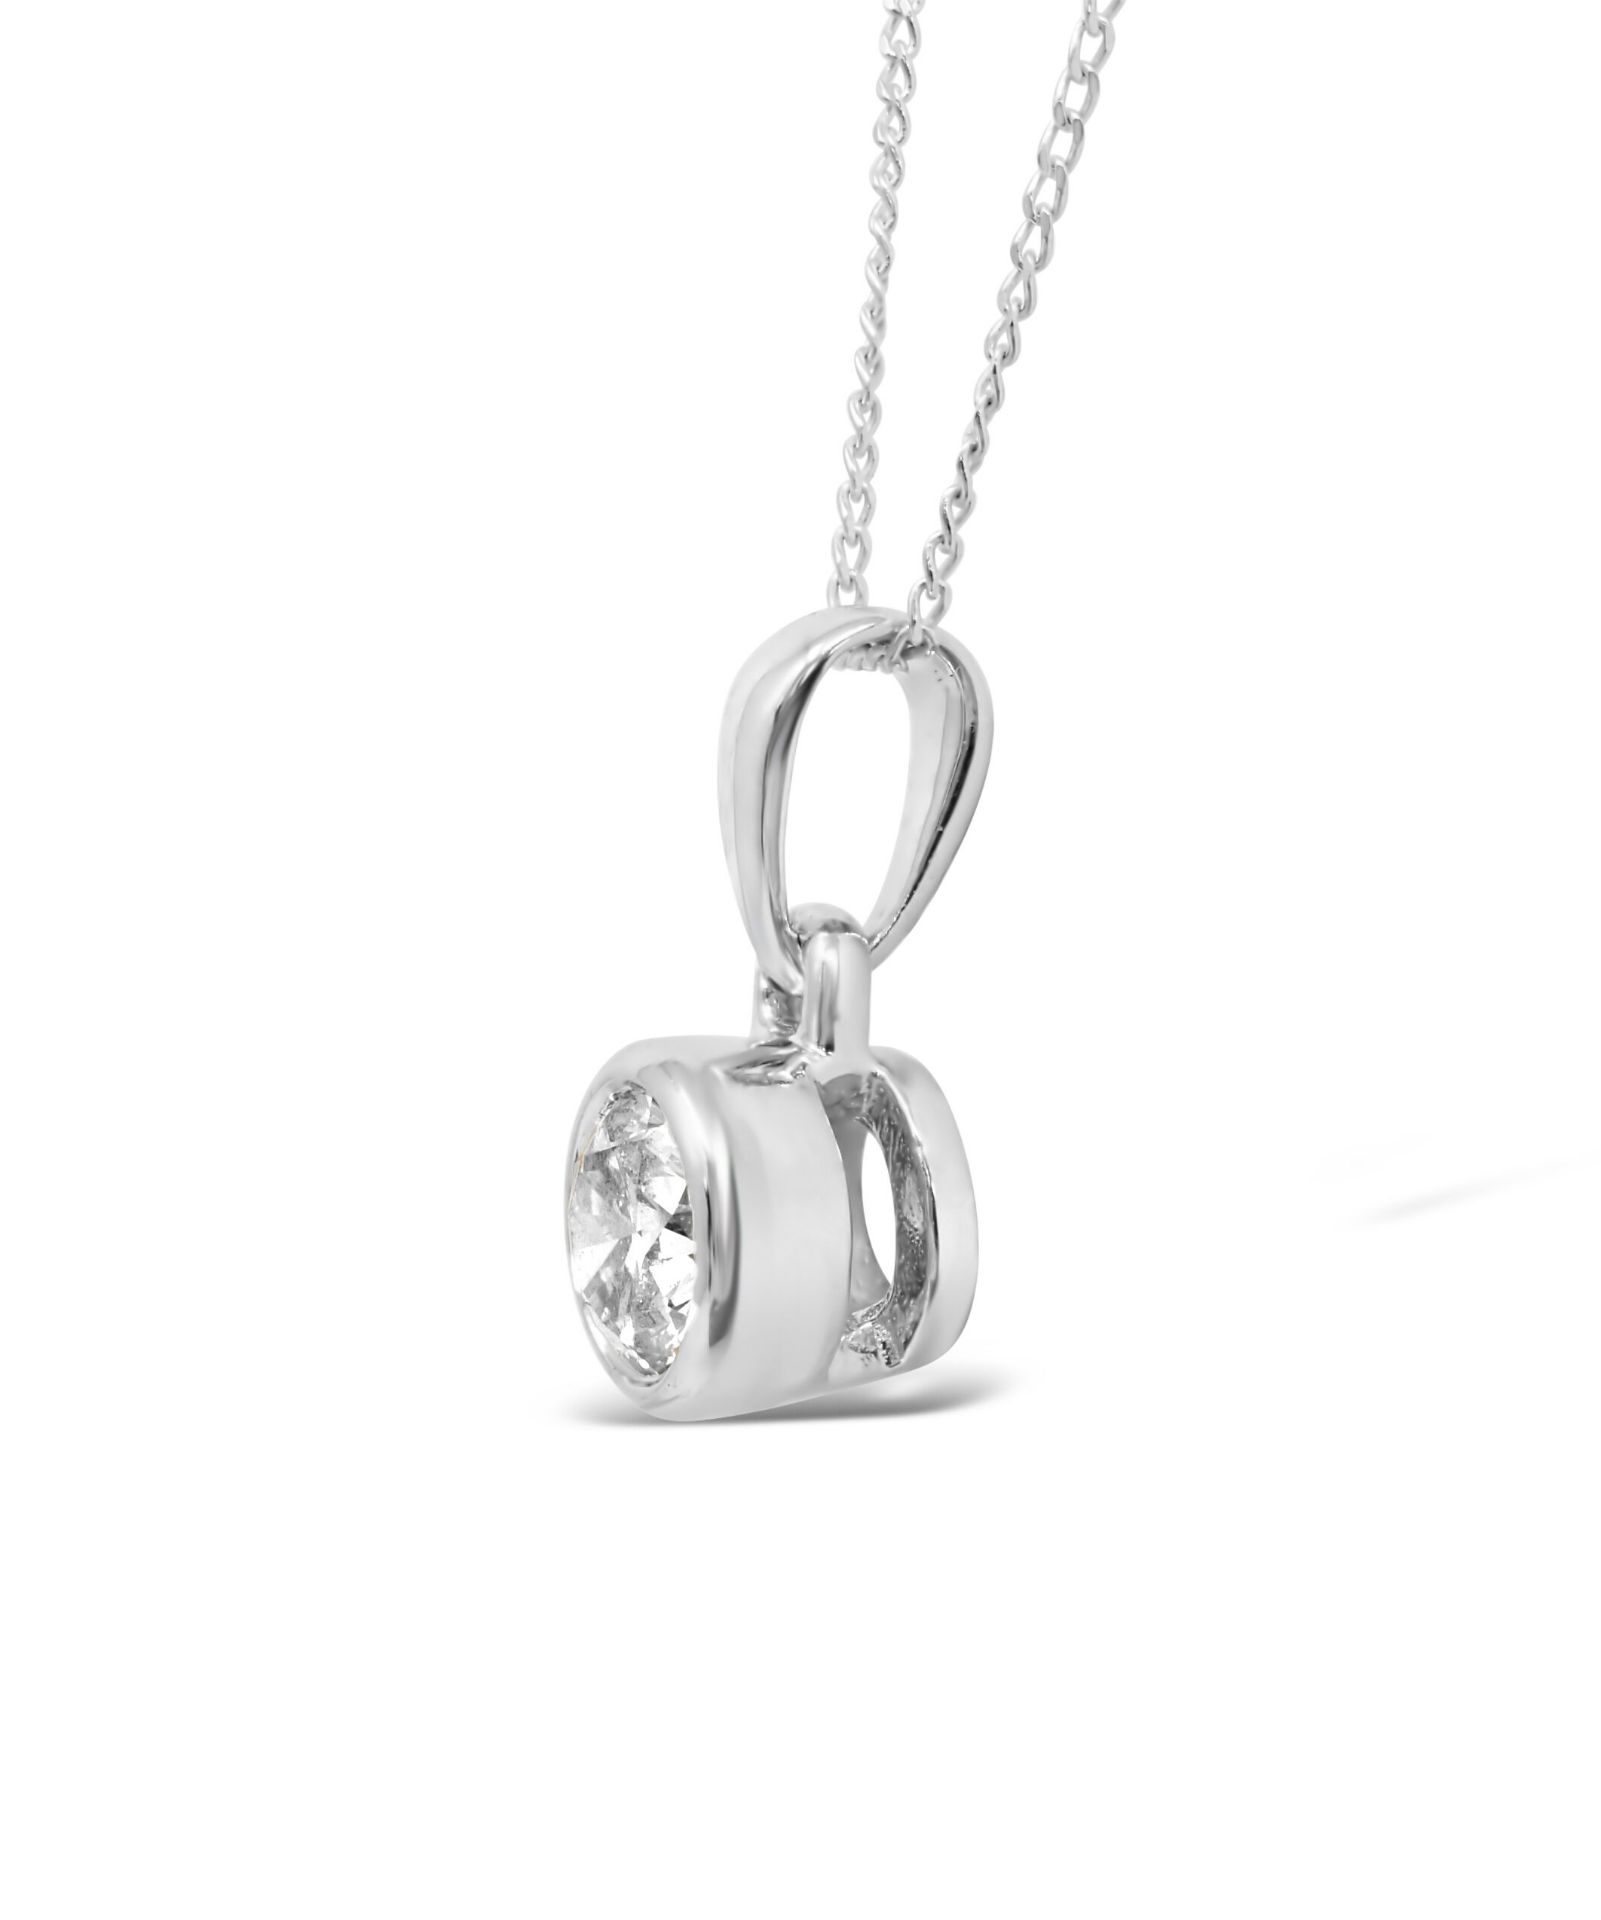 Necklace Pendant With Bezet Set Diamond, 9ct White Gold RRP £779 Weight 0.68g, Diamond Weight 0.